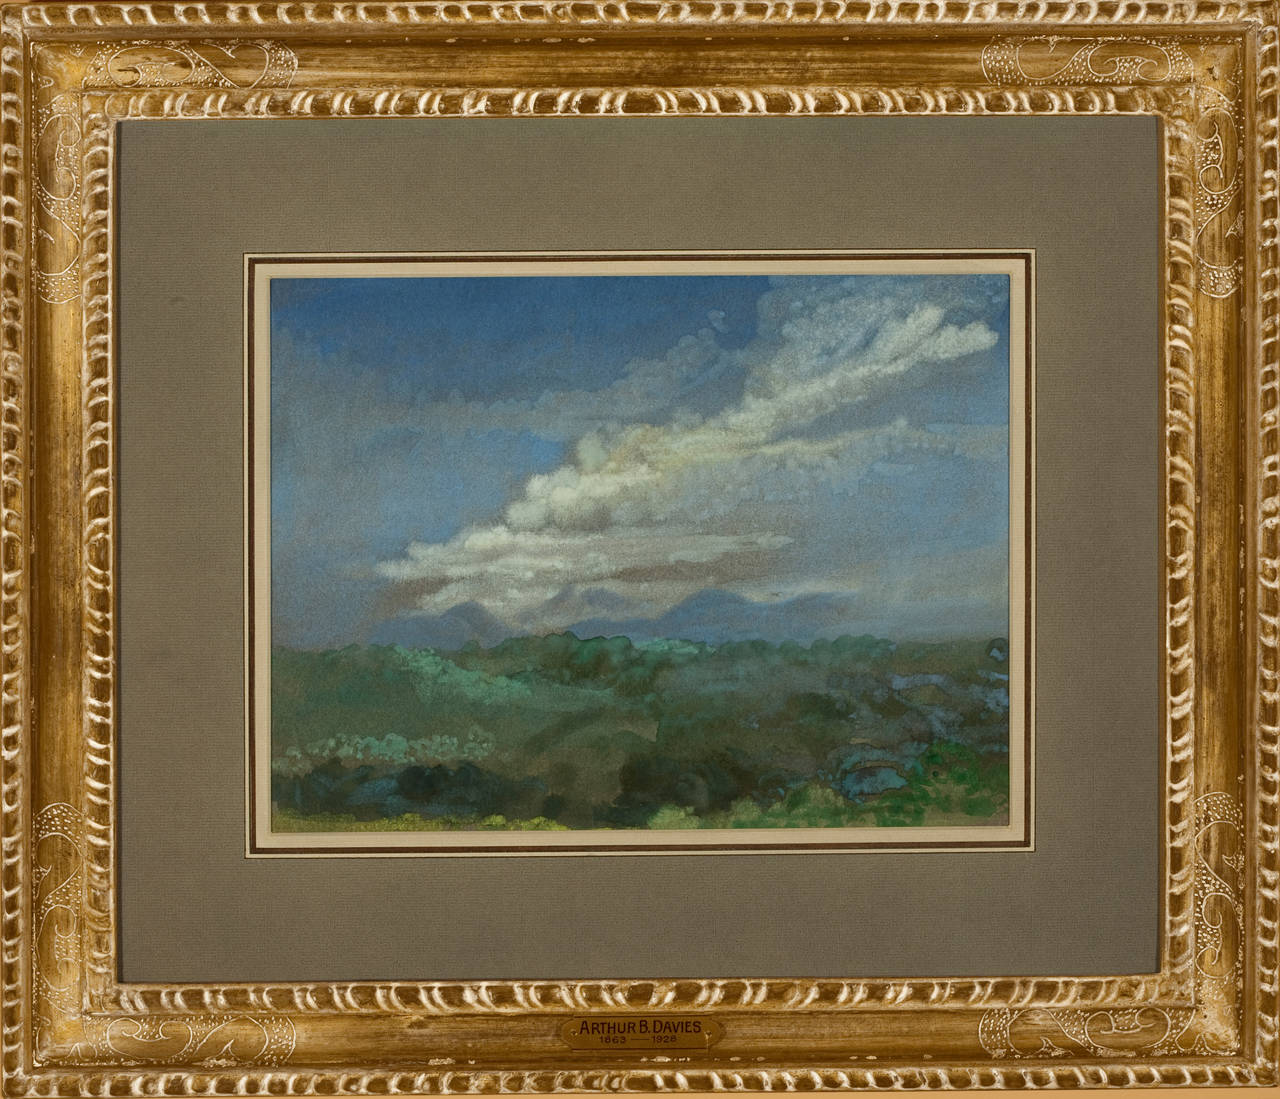 Arthur B. Davies Landscape Art - "Cloud Study"